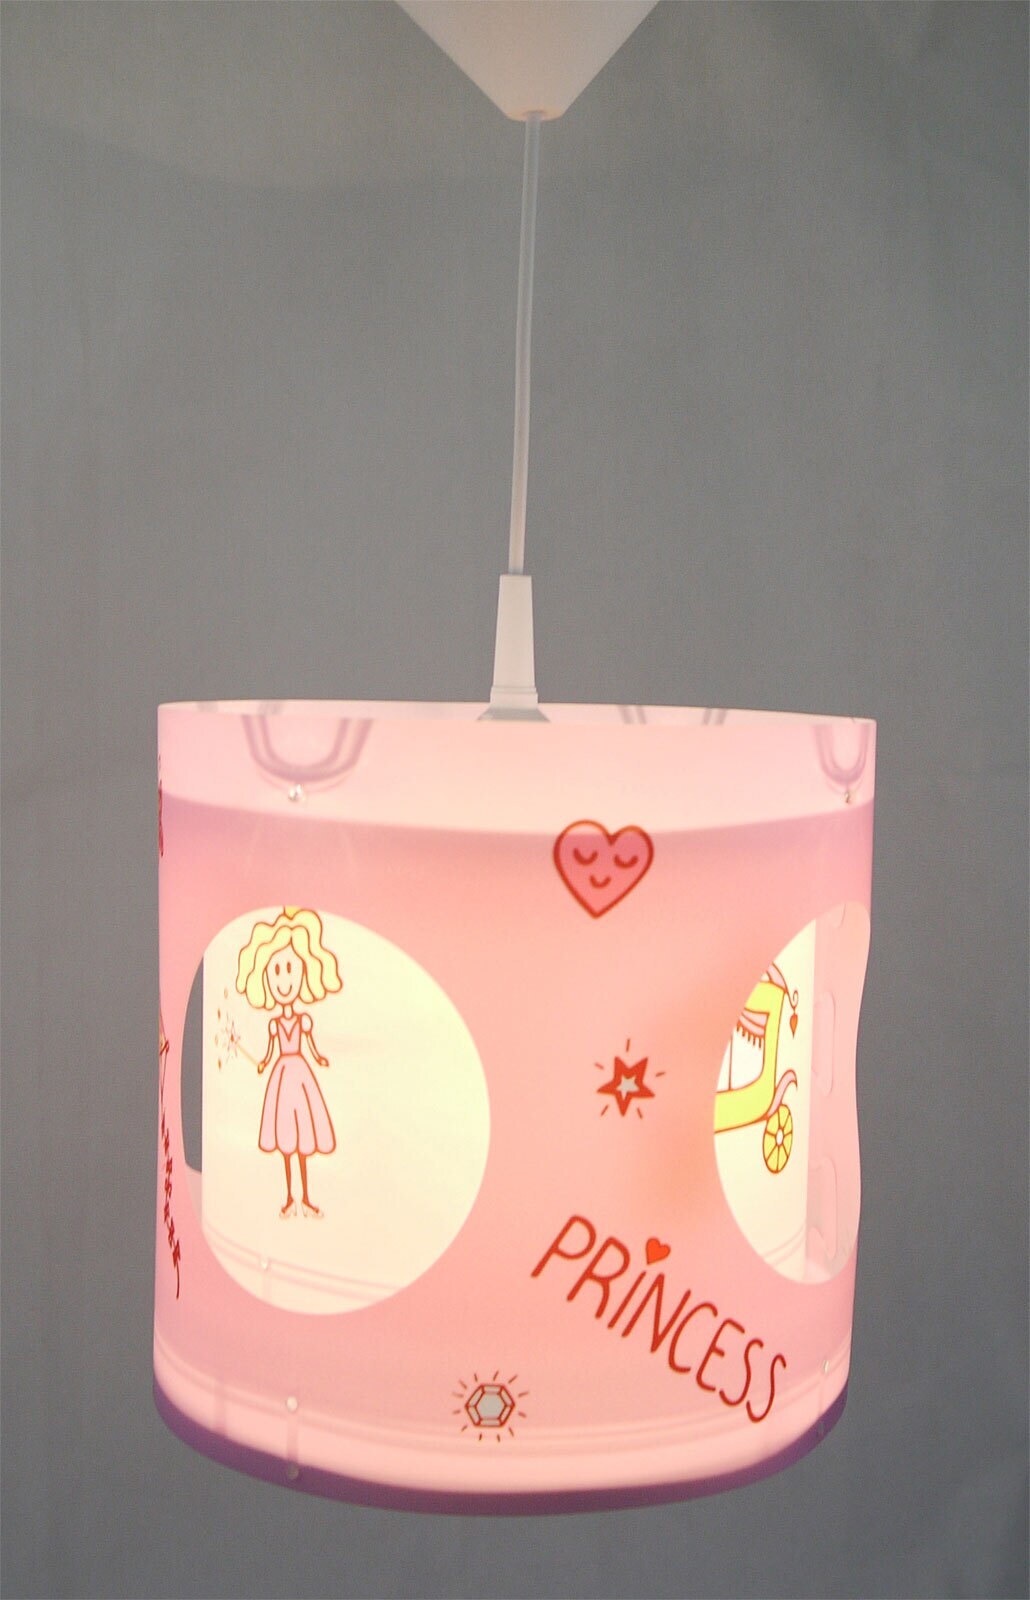 niermann Retrofit Kinderlampe Pendel Princess